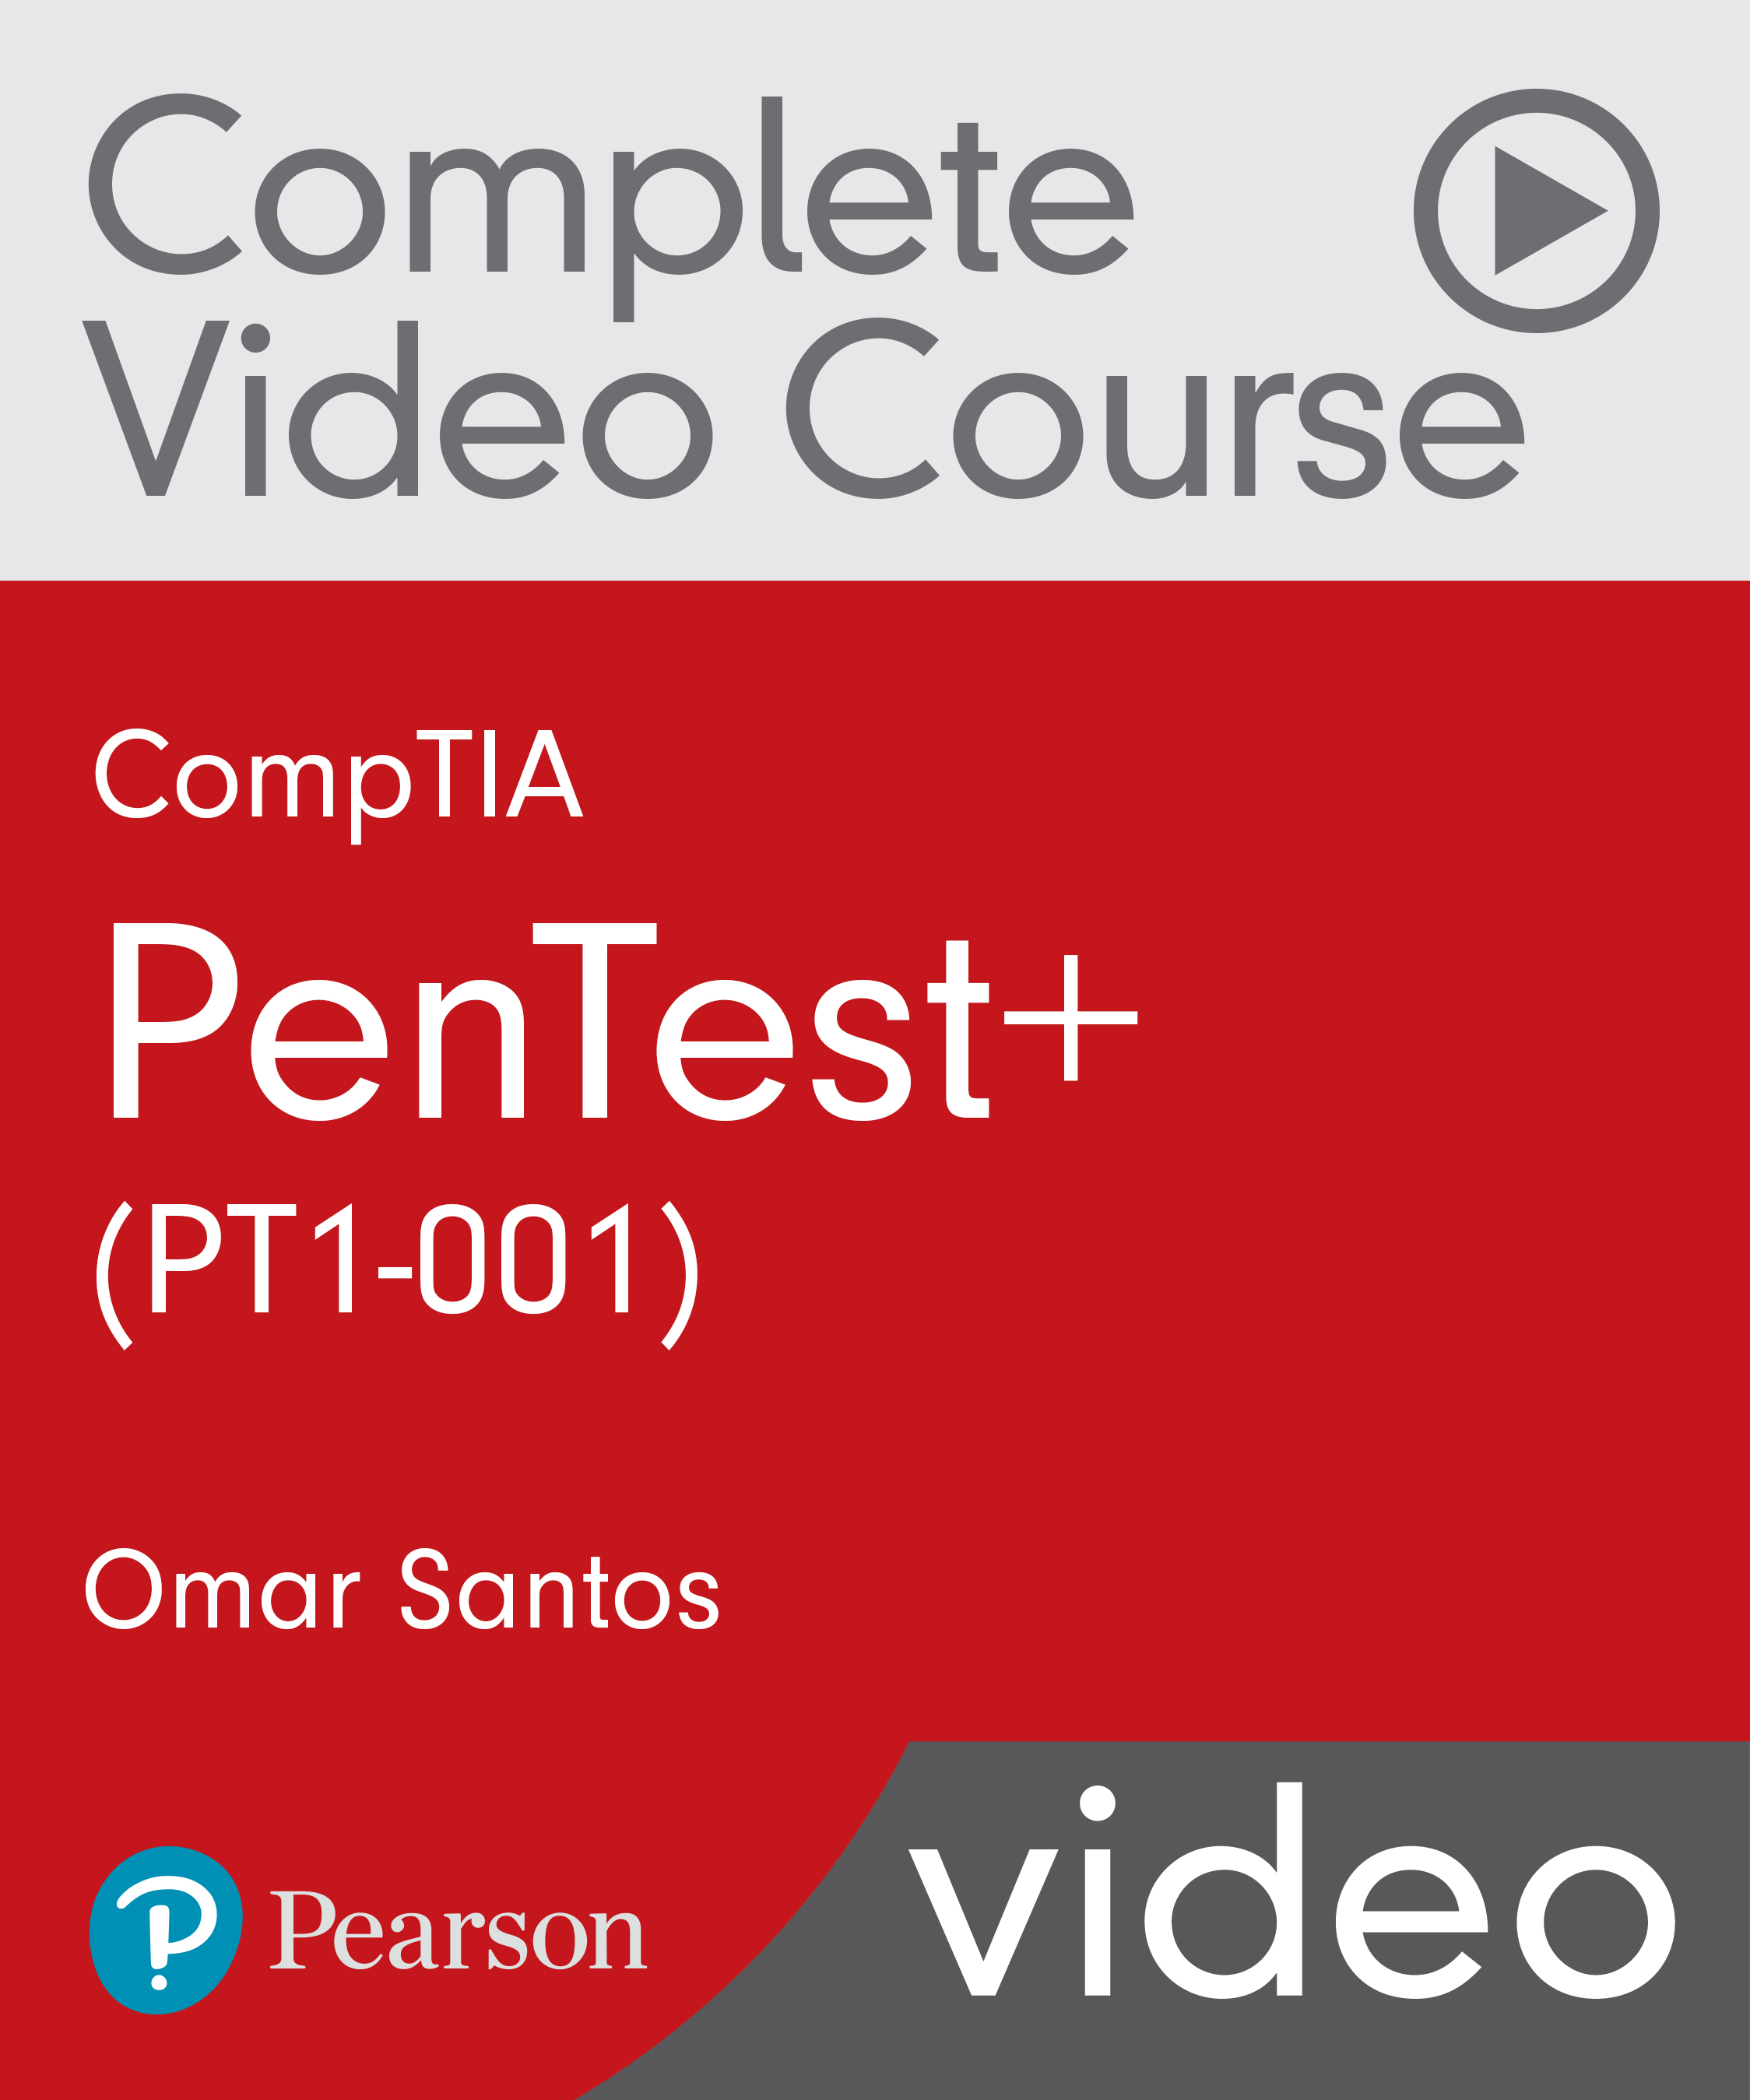 CompTIA PenTest+ (PT1-001) Complete Video Course